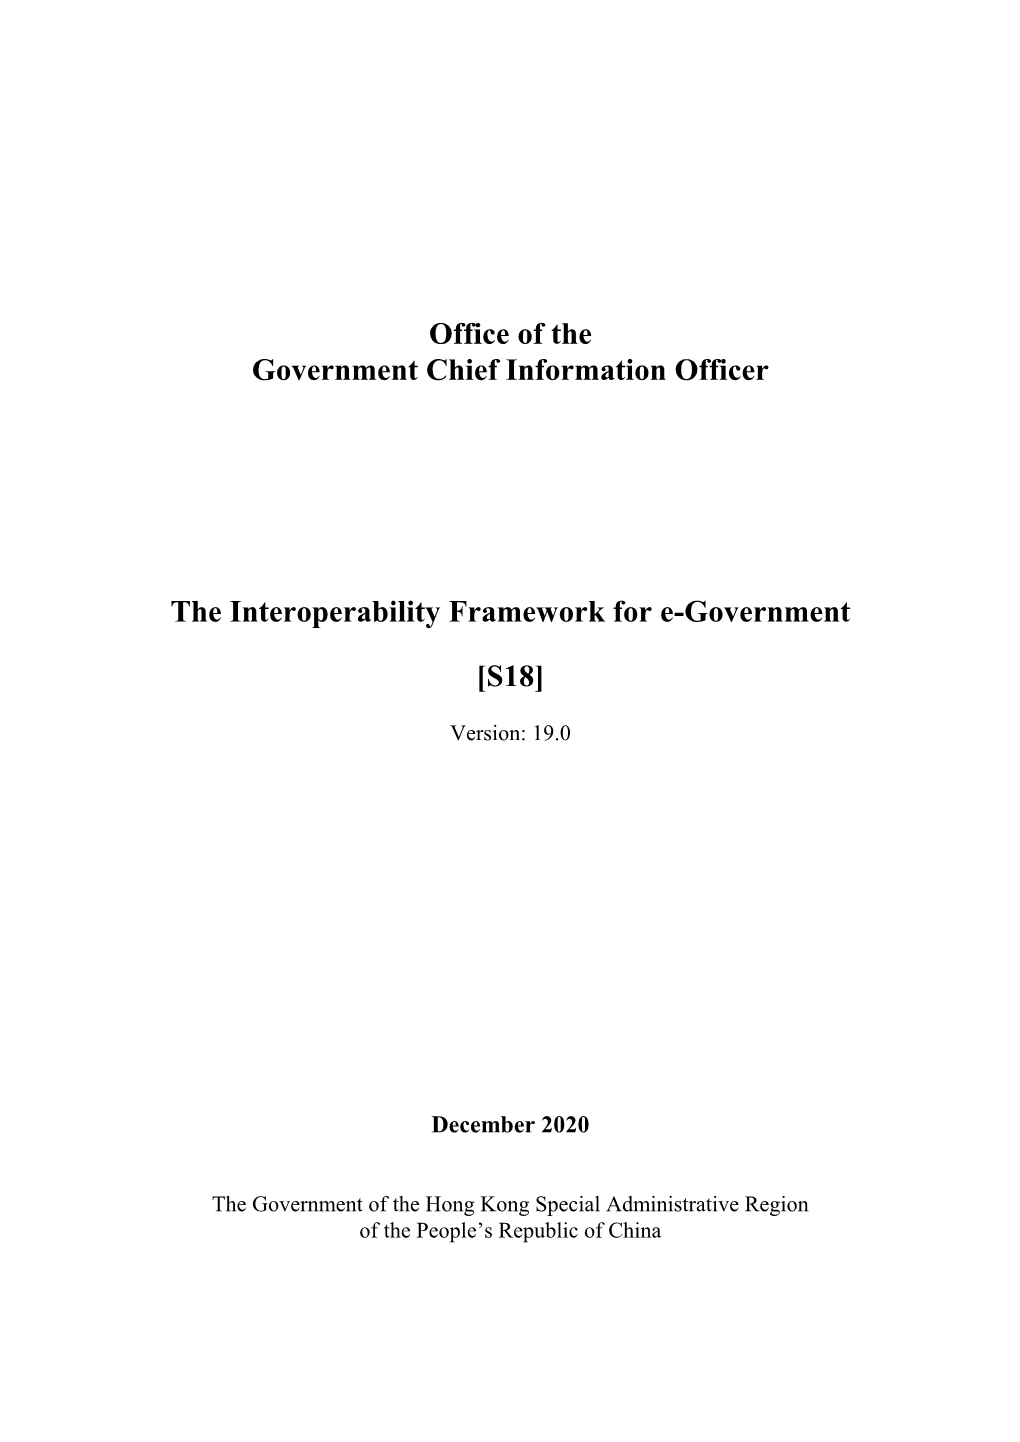 The Interoperability Framework for E-Government